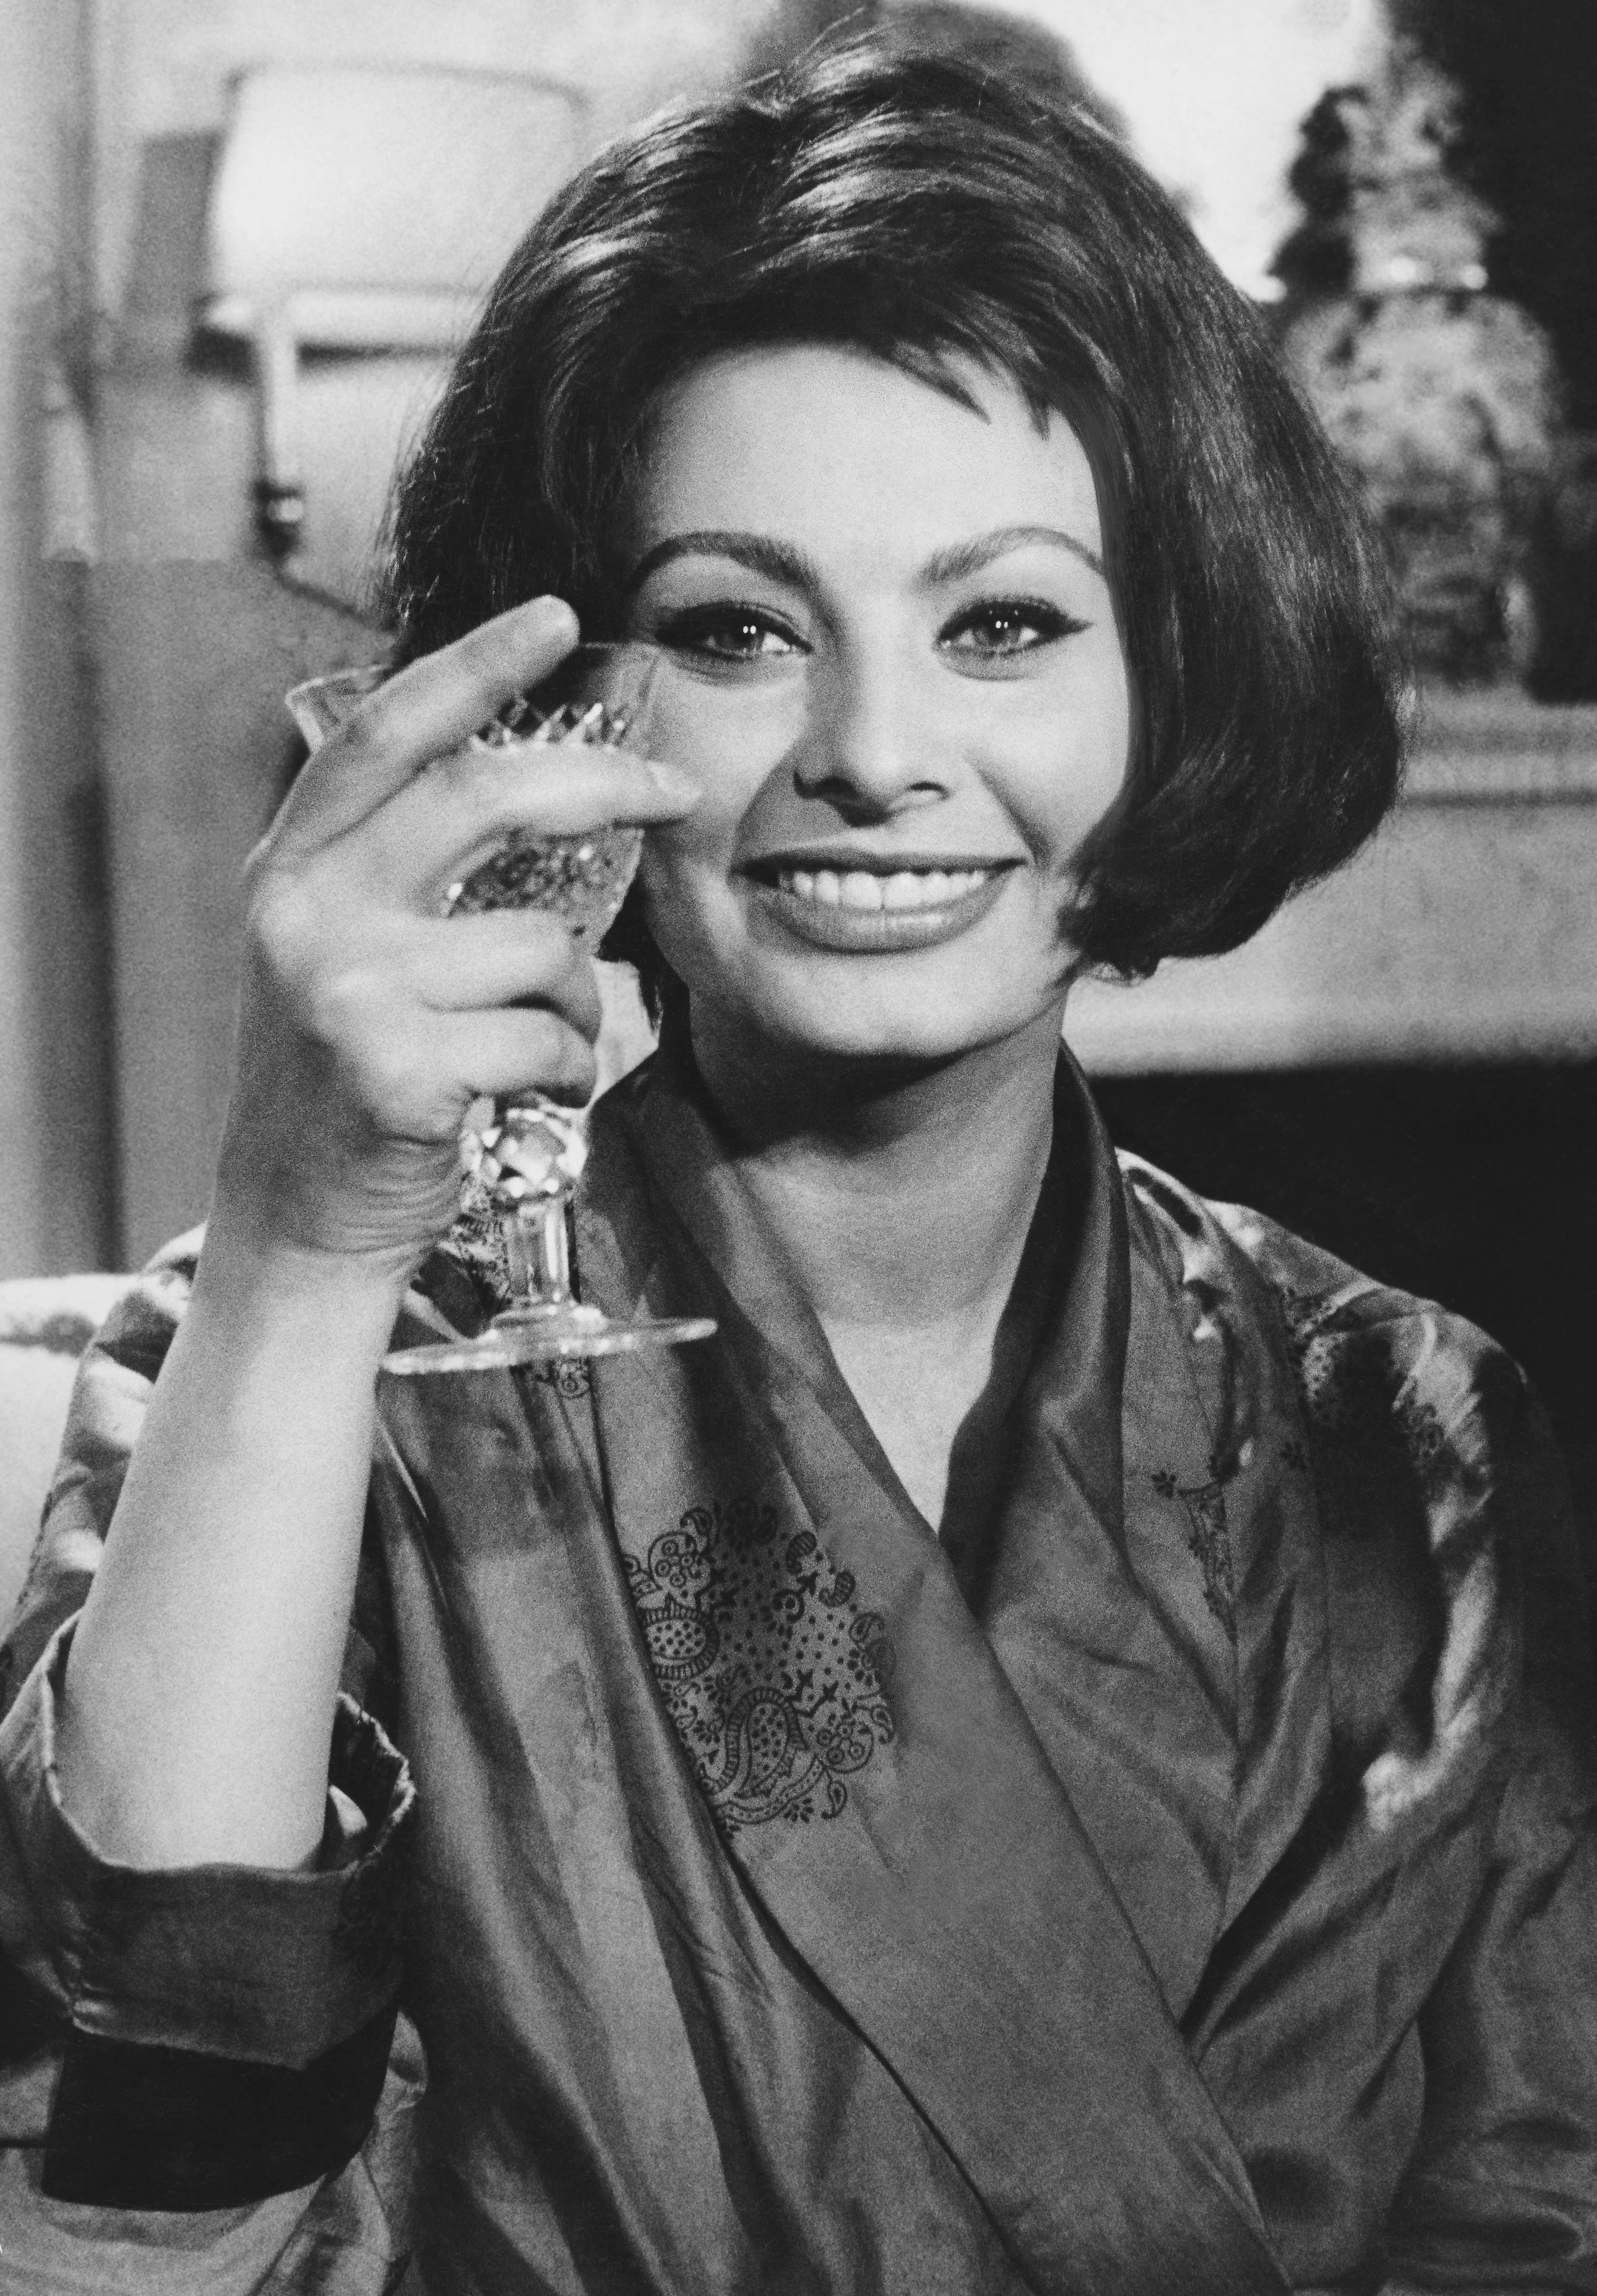 Unknown Black and White Photograph - Sophia Loren Toasting the Camera Globe Photos Fine Art Print